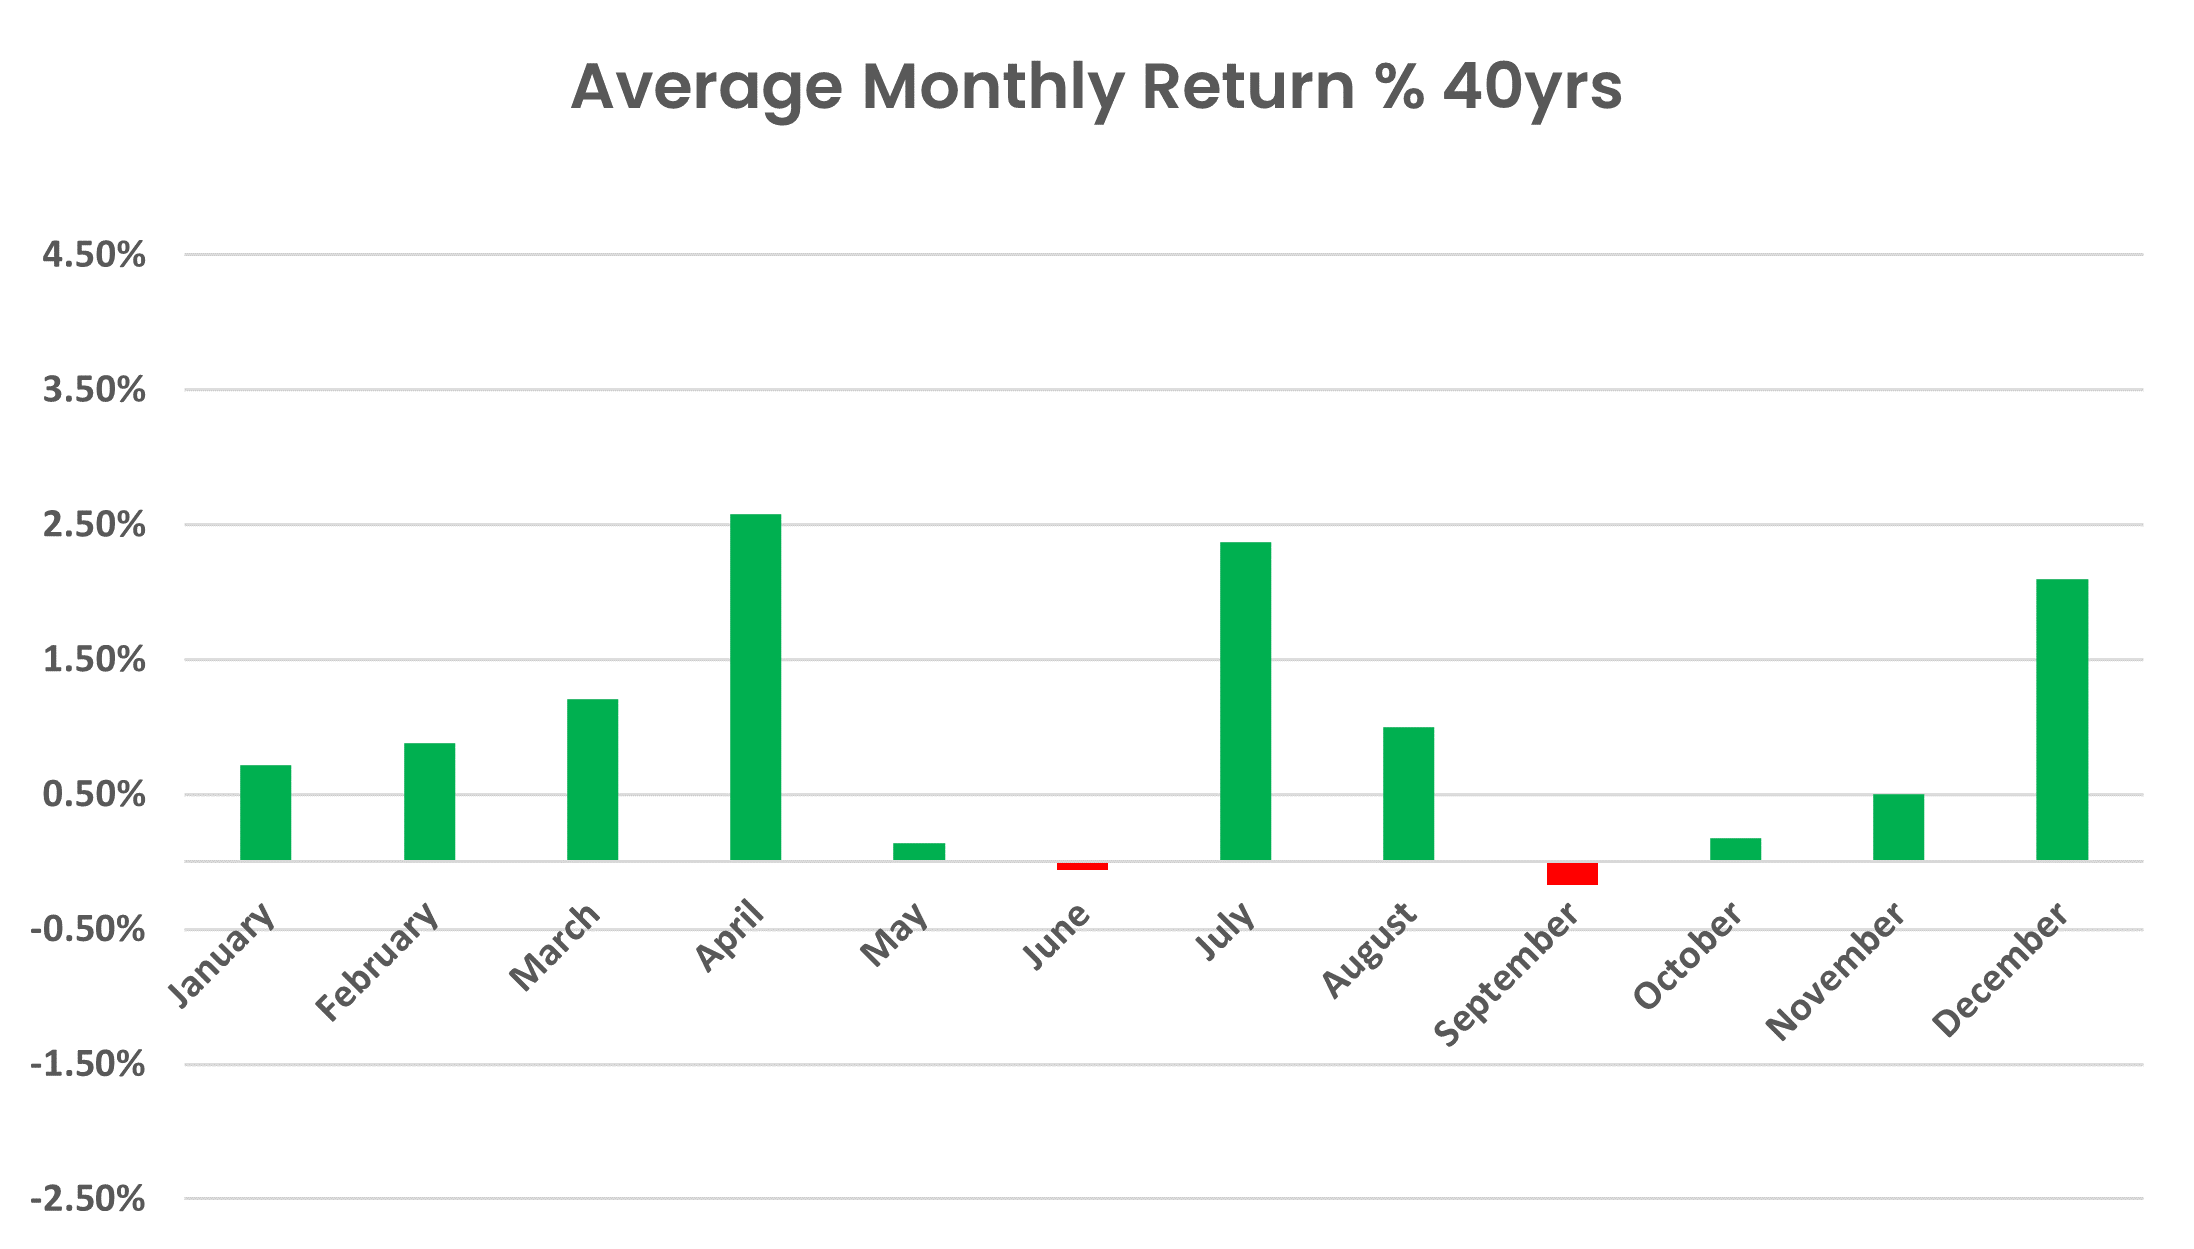 All Ordinaries Total Return Index Seasonality - Monthly Performance 40 years